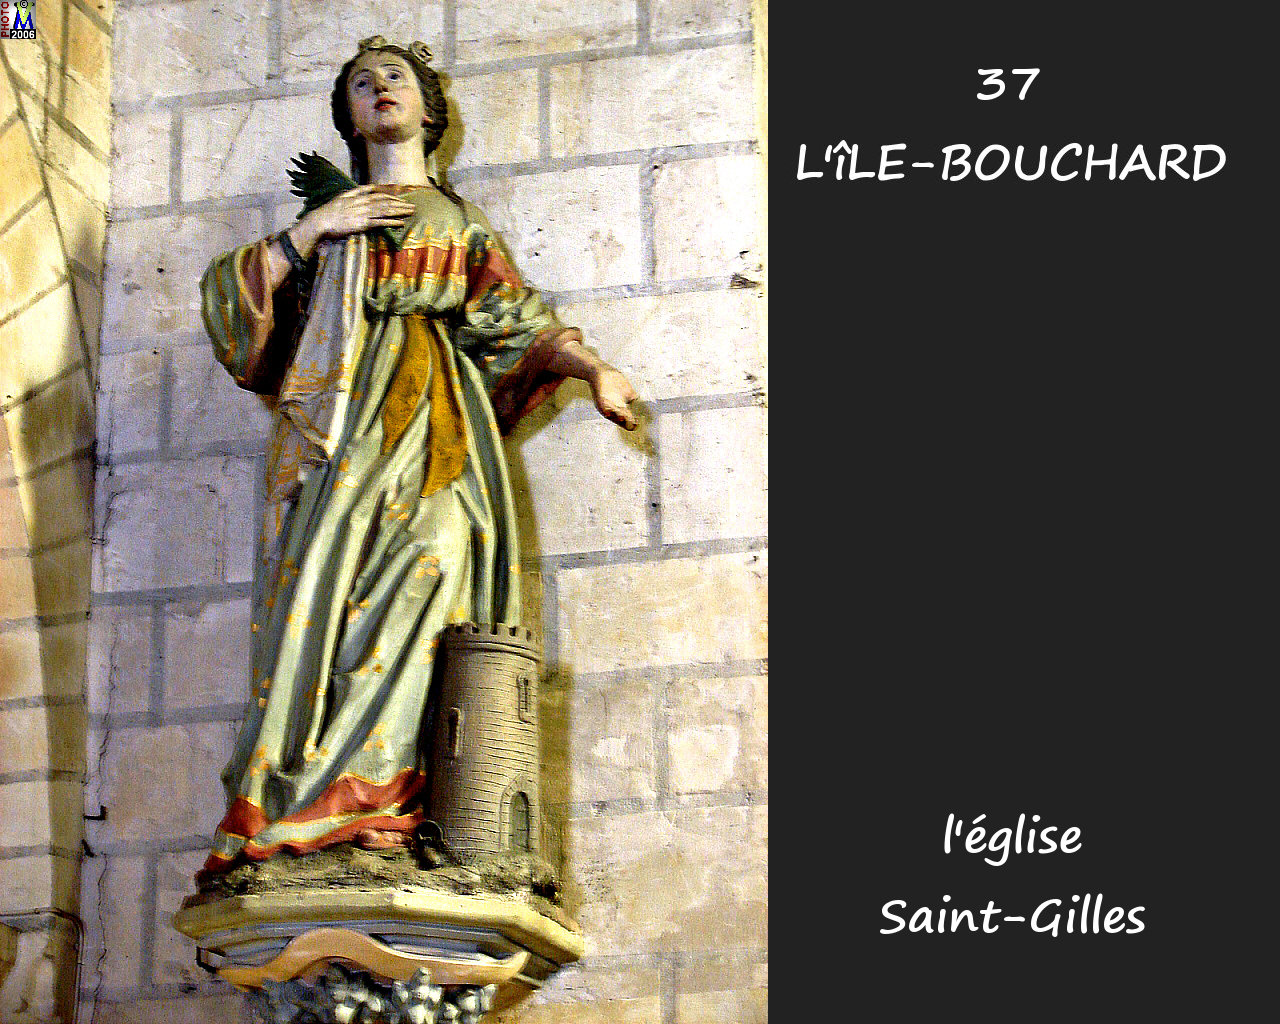 37L-ILE-BOUCHARD_eglise_Gilles_290.jpg